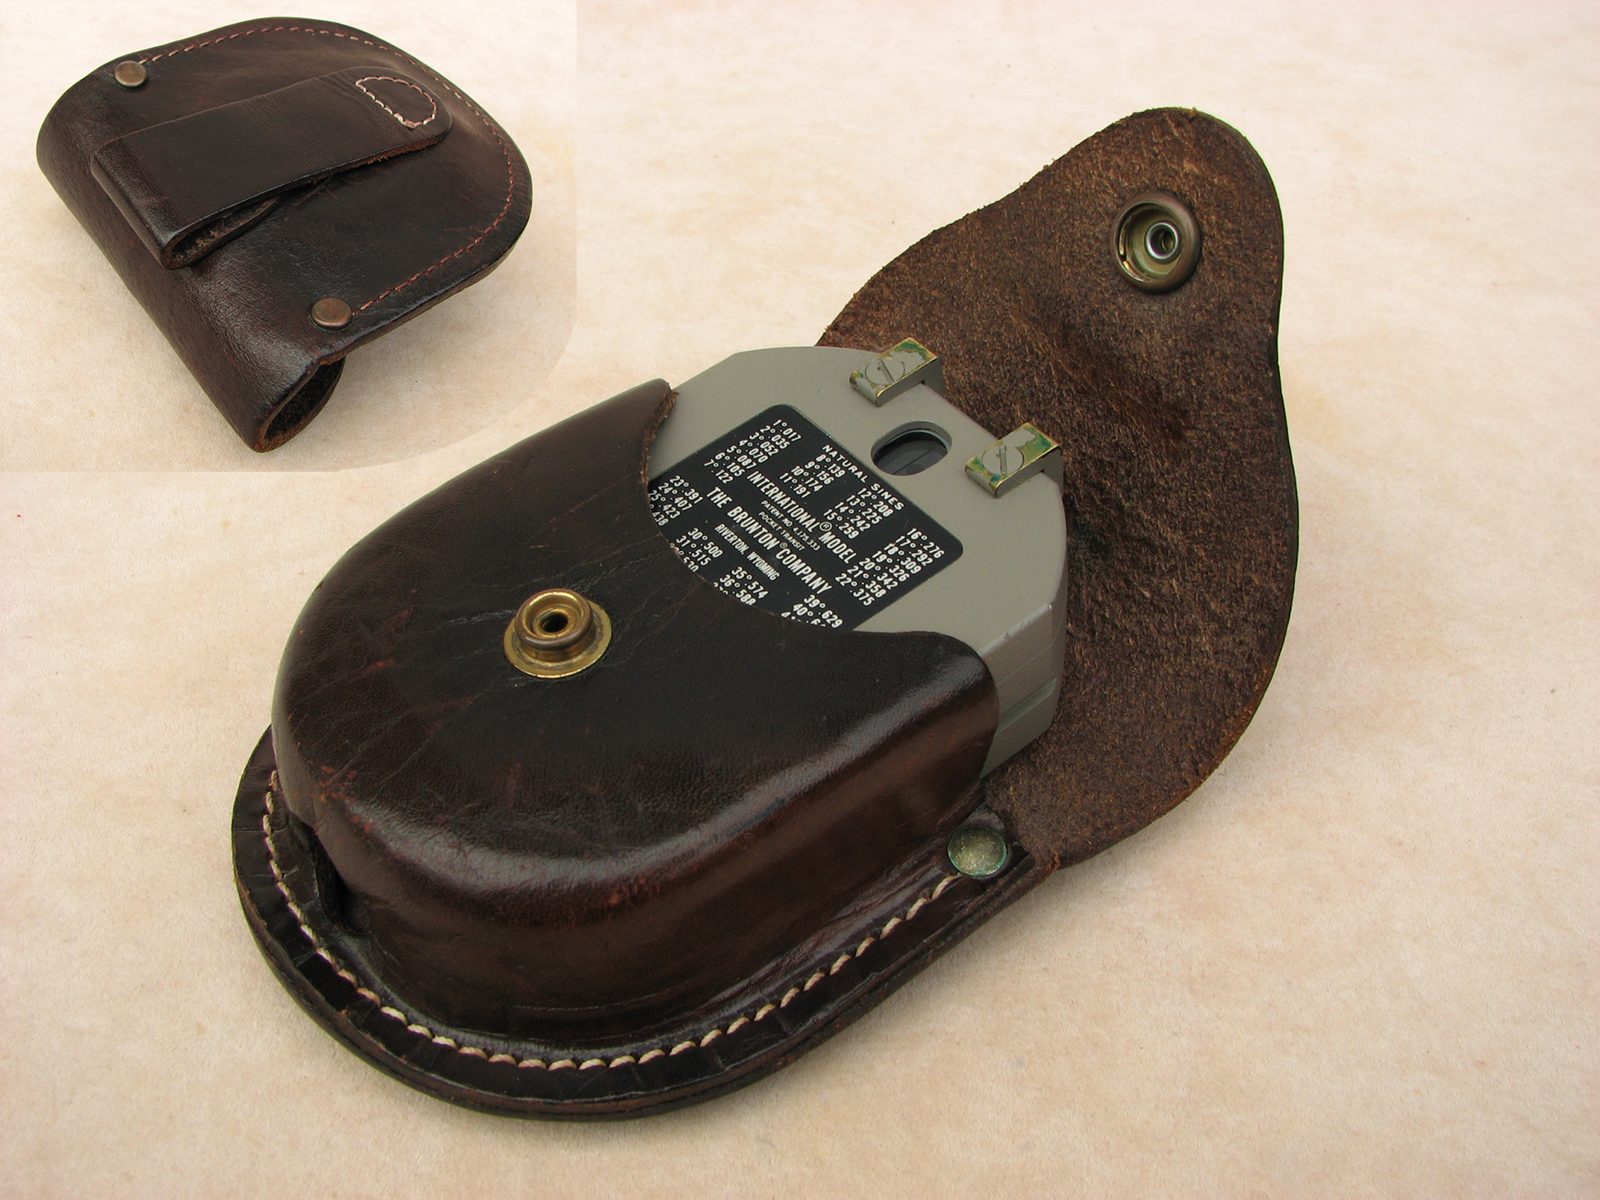 Original Brunton compass, International Model, in Brunton branded leather case